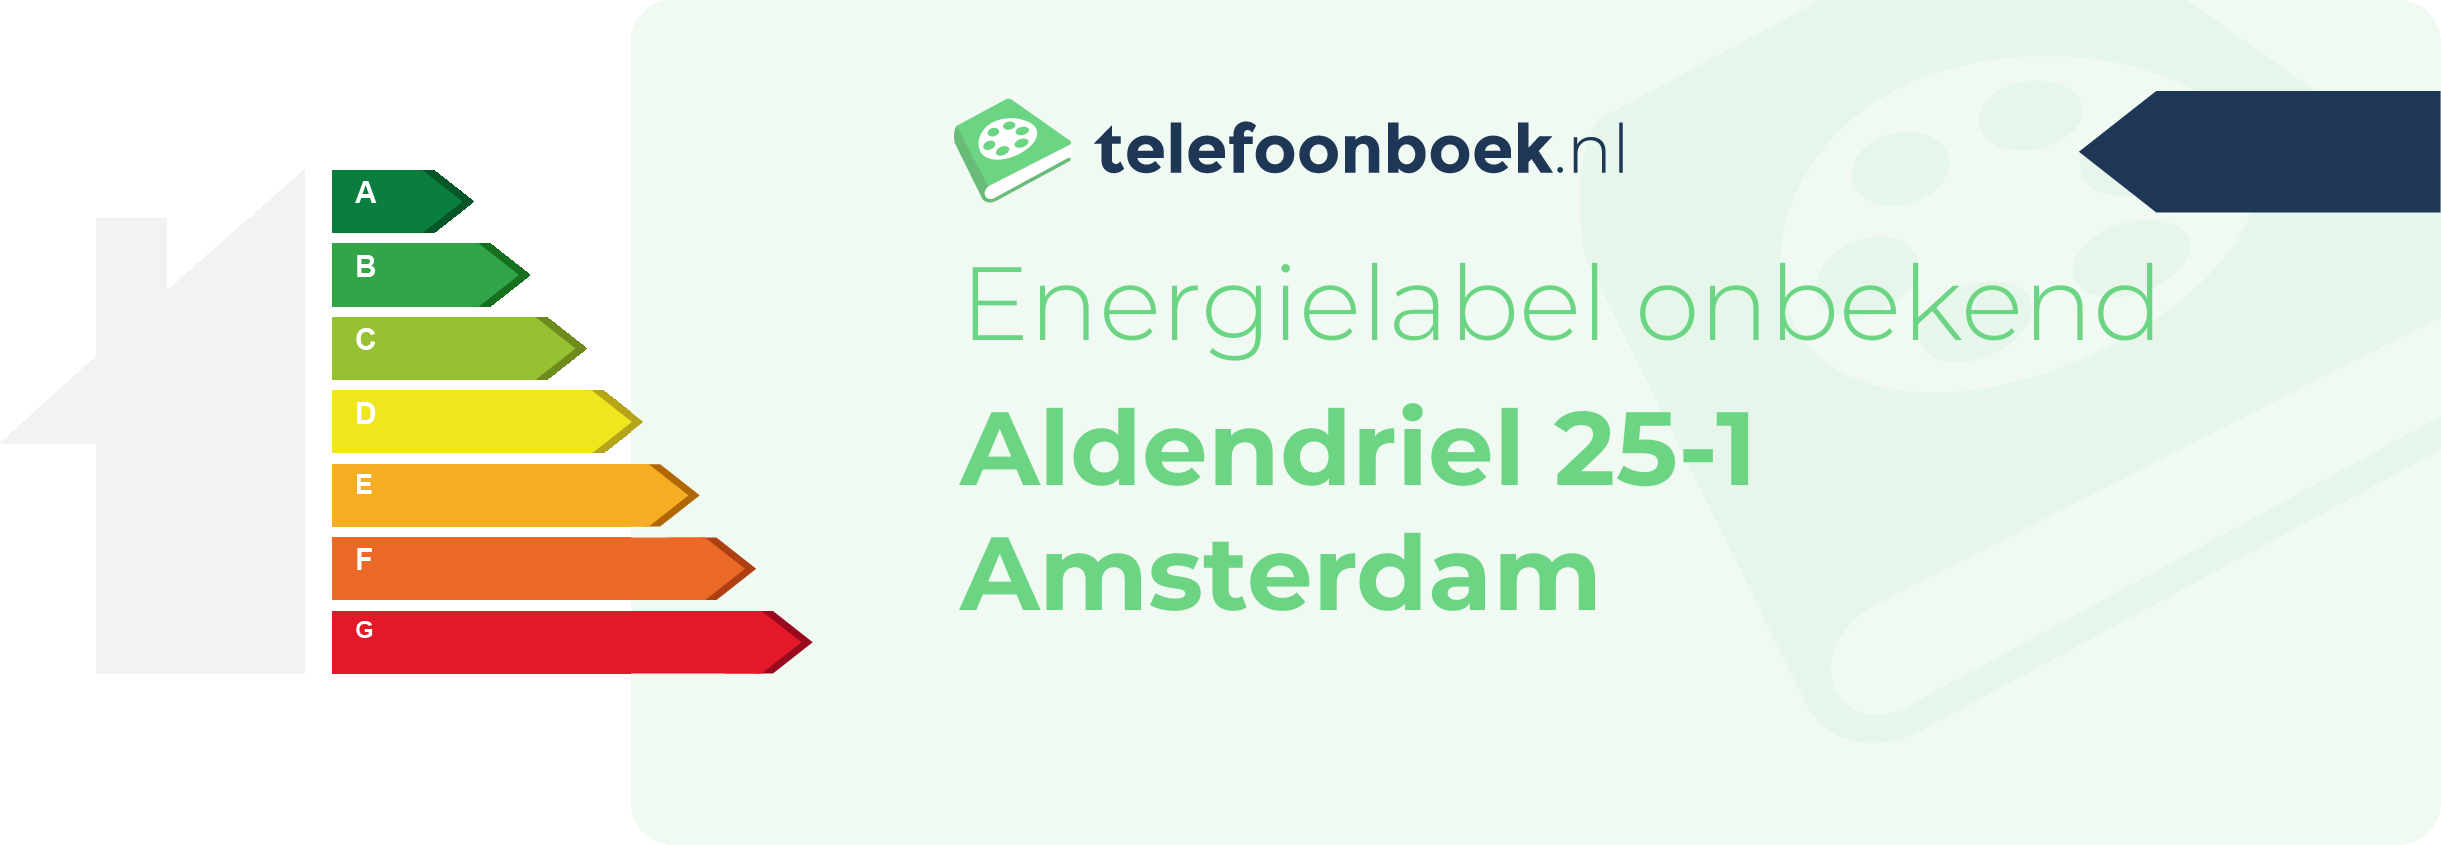 Energielabel Aldendriel 25-1 Amsterdam